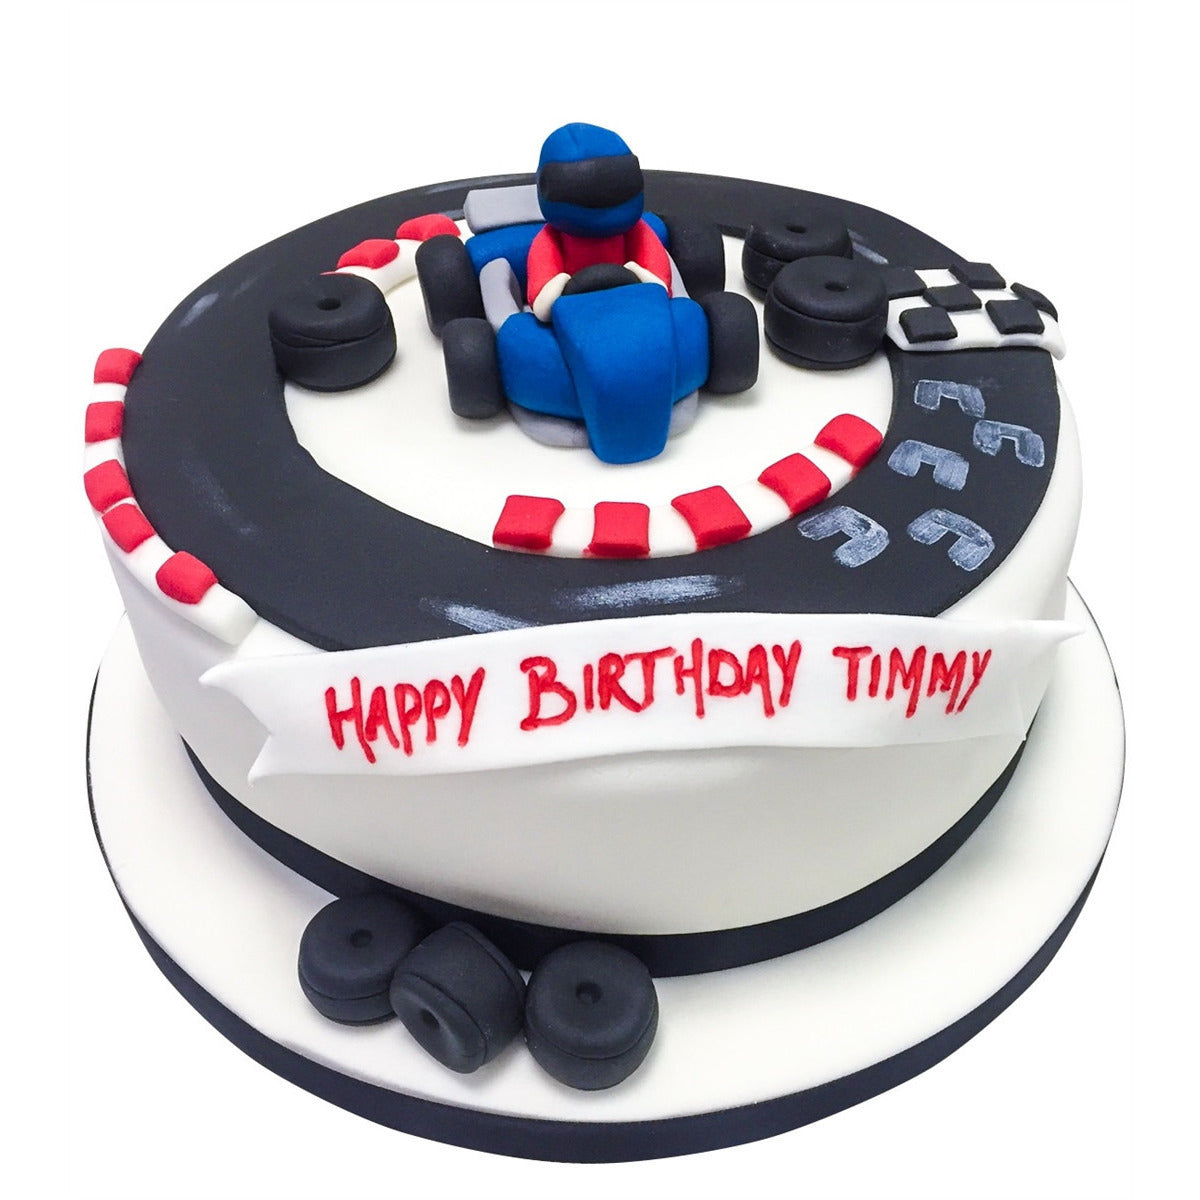 100+ HD Happy Birthday Banushan Cake Images And Shayari